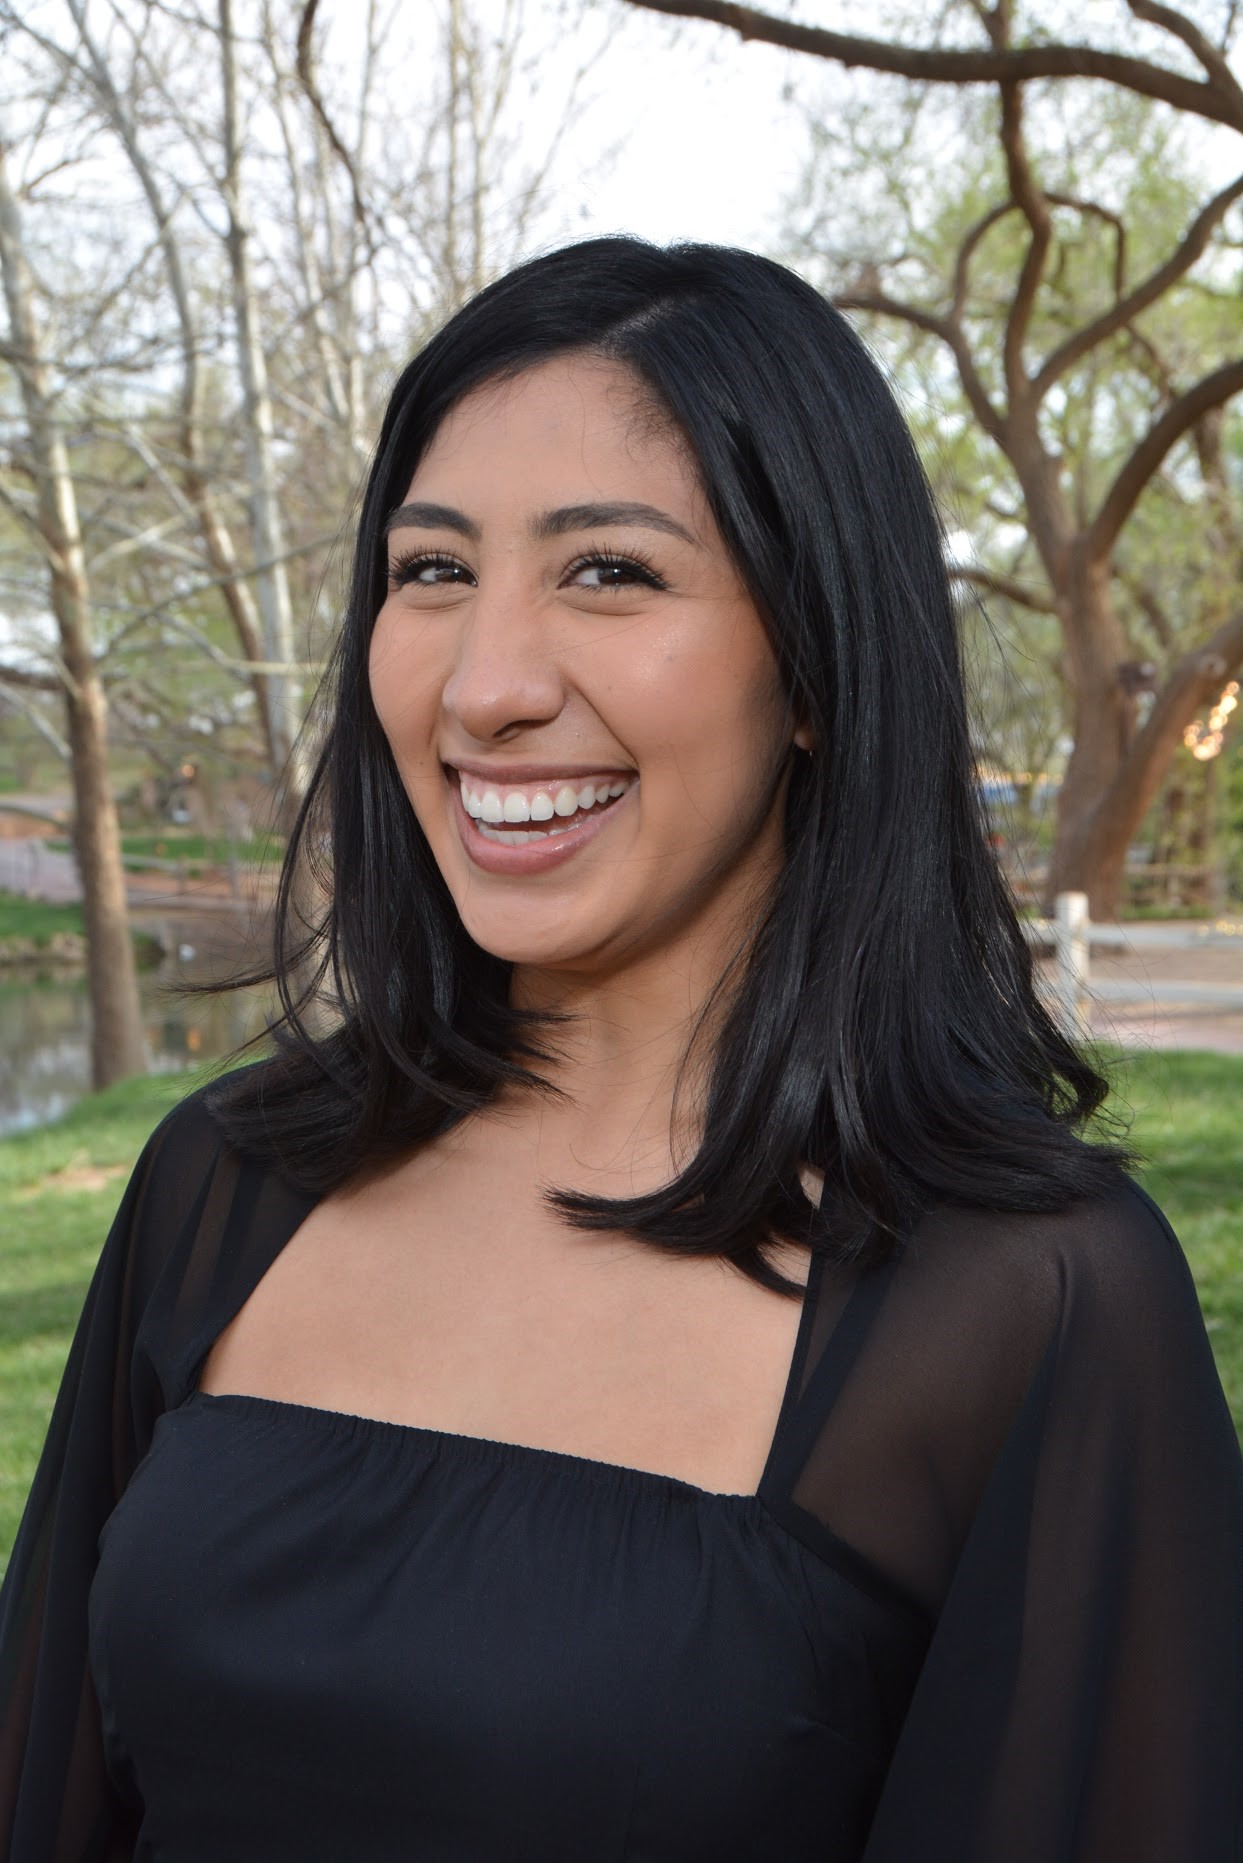 Woman smiling in black top